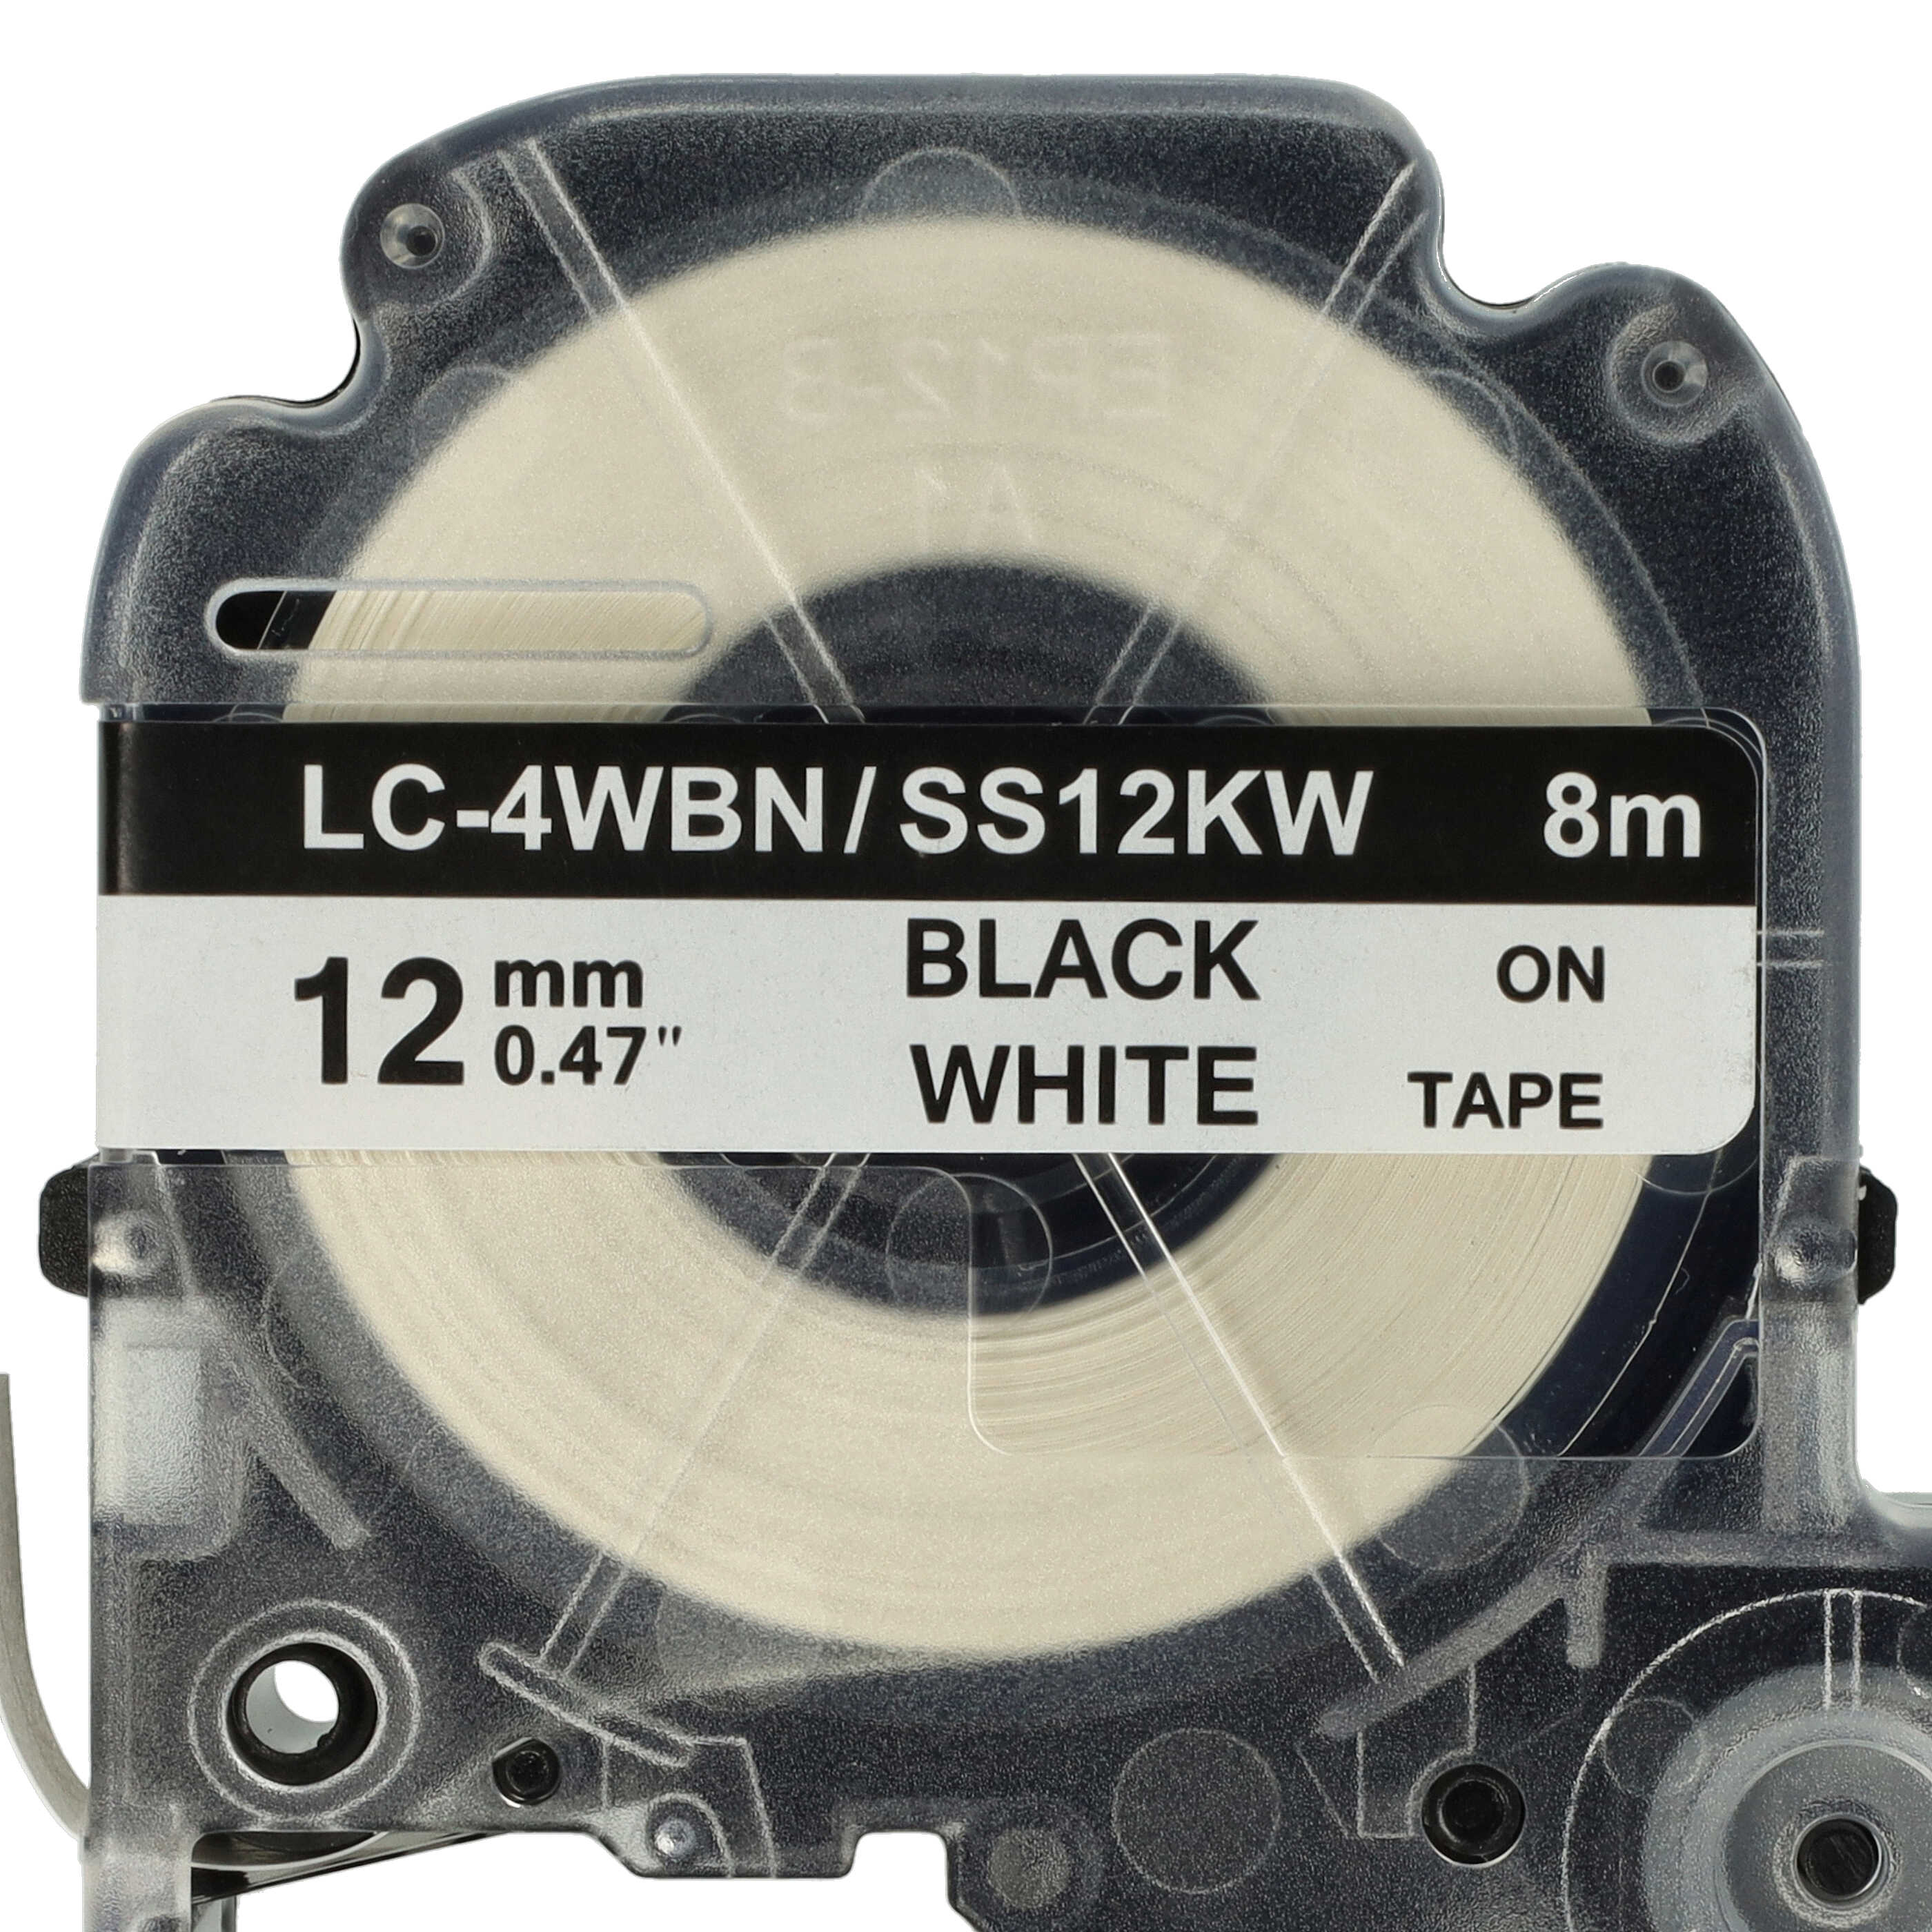 3x Casete cinta escritura reemplaza Epson SS12KW, LC-4WBN Negro su Blanco